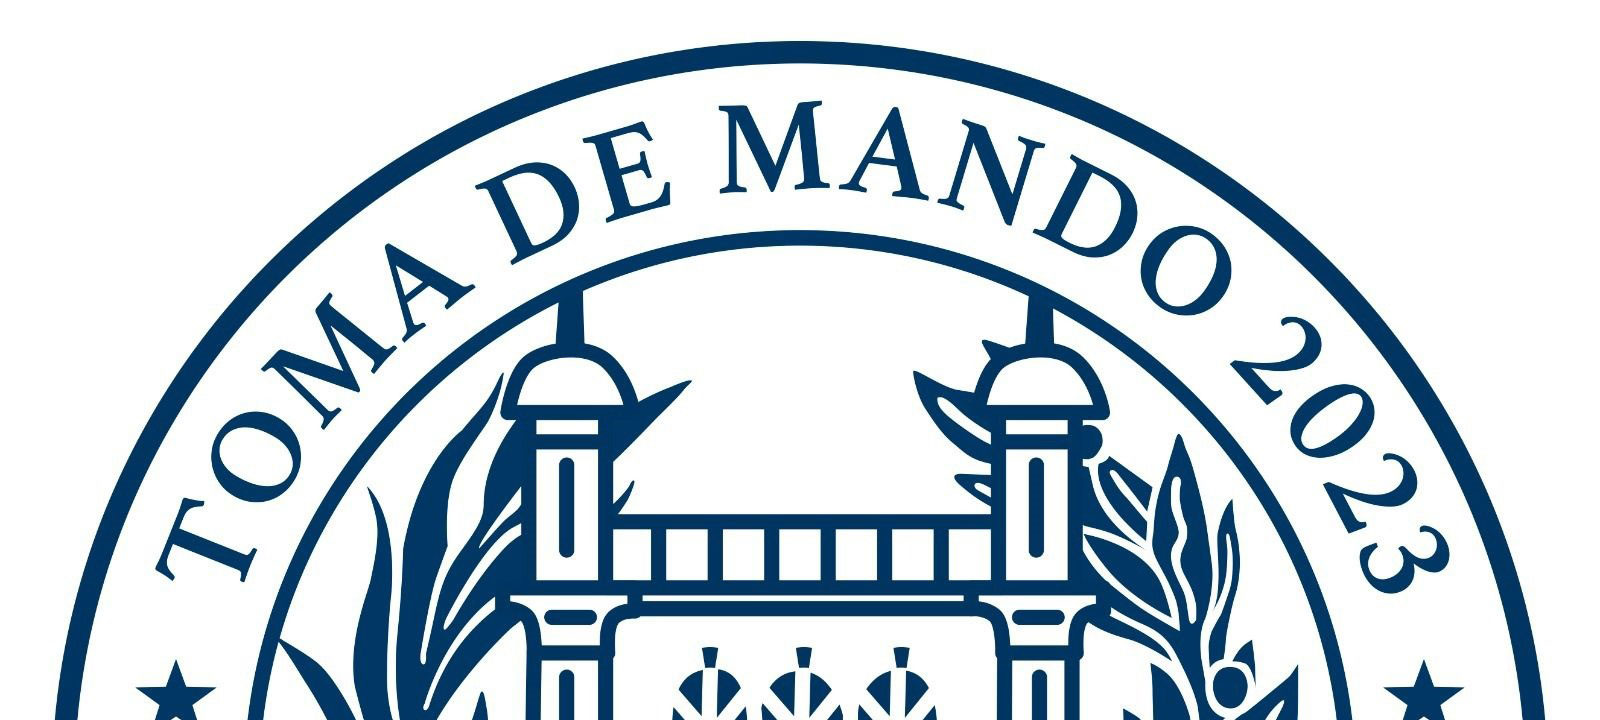 LogoTomadeMandoPORTADA.jpg